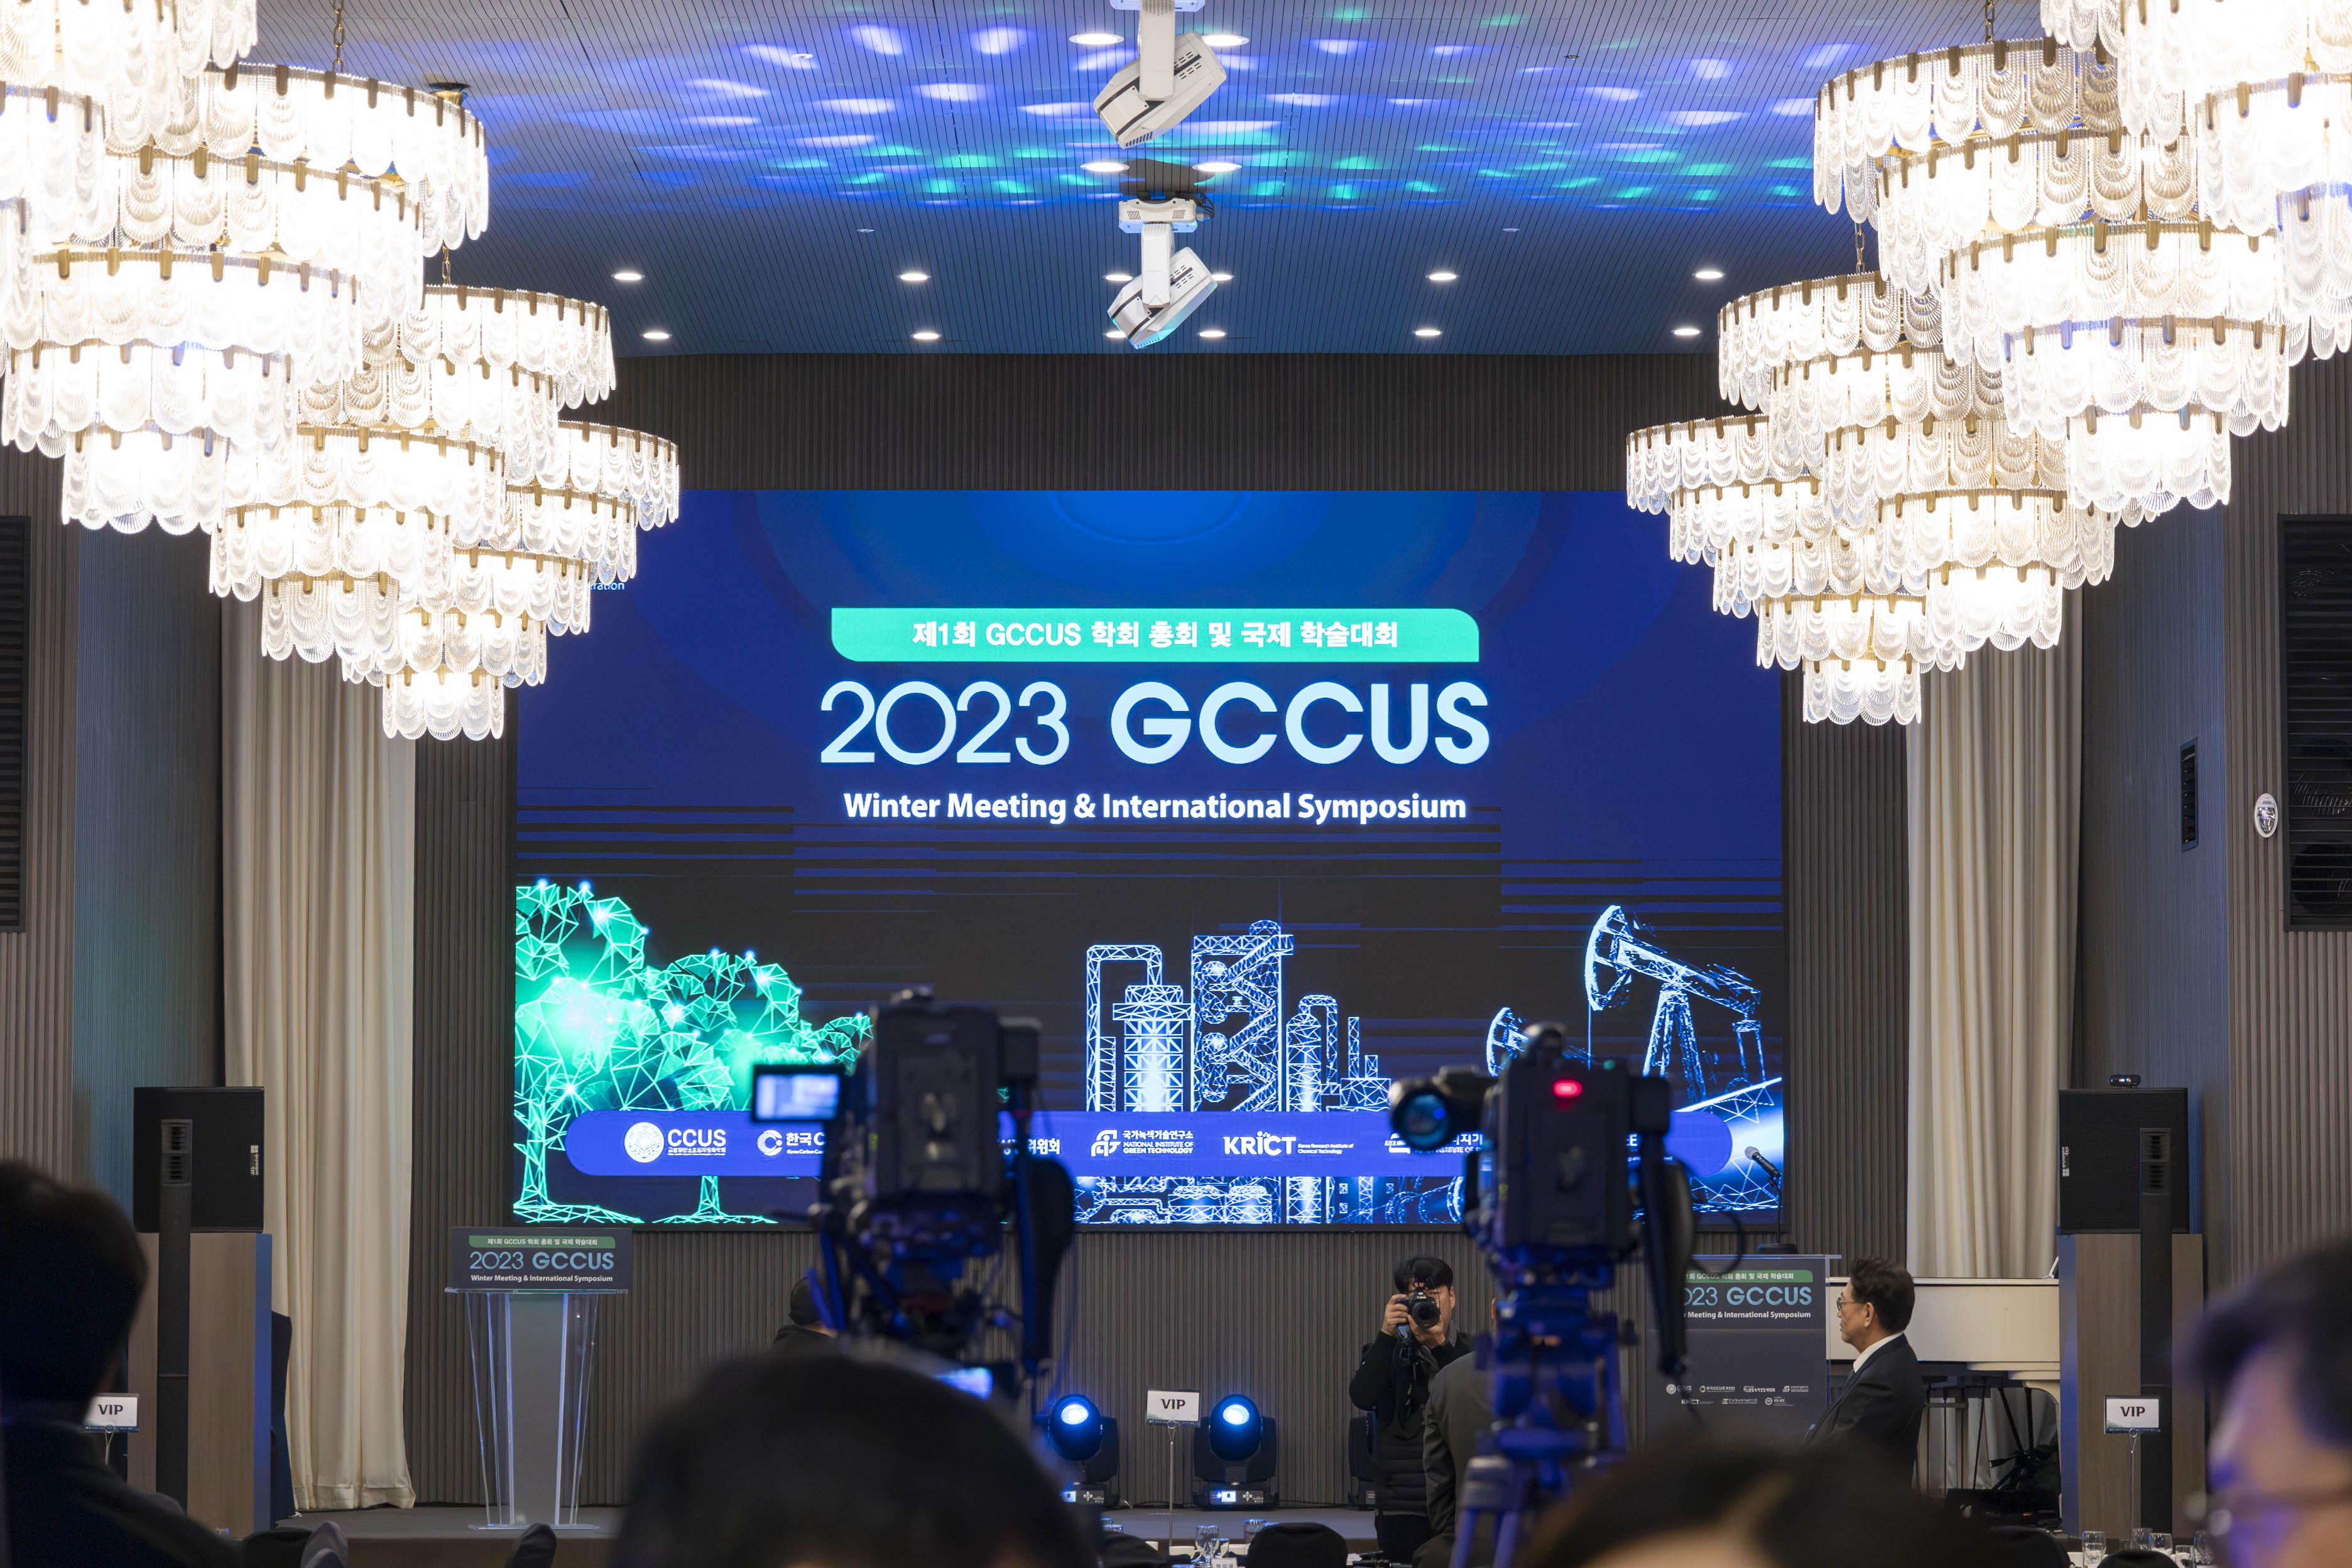 Session 2_제1회 GCCUS 학회 총회 및 국제 학술대회(2023 GCCUS Winter Meeting & International Symposium)